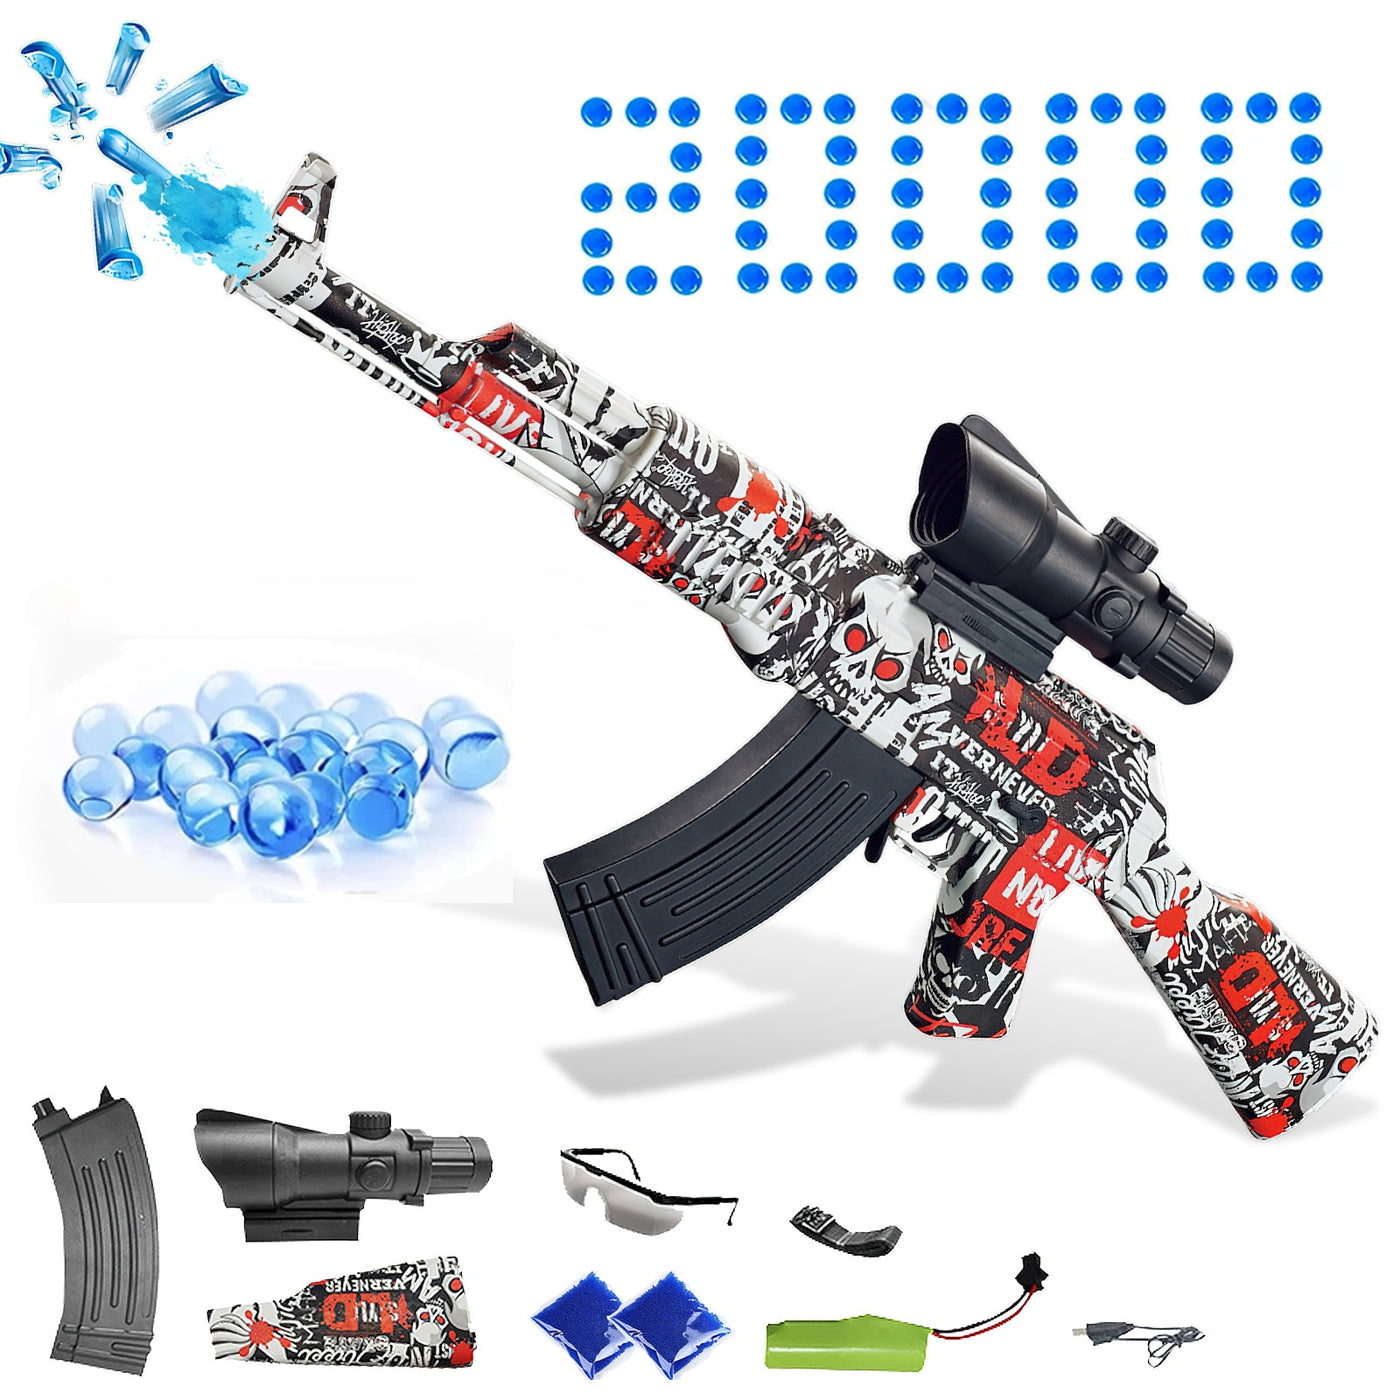 AK47 Gel Blaster Gun Toy Gun Electric Gun For Outdoor Activities - Black Opal PMC